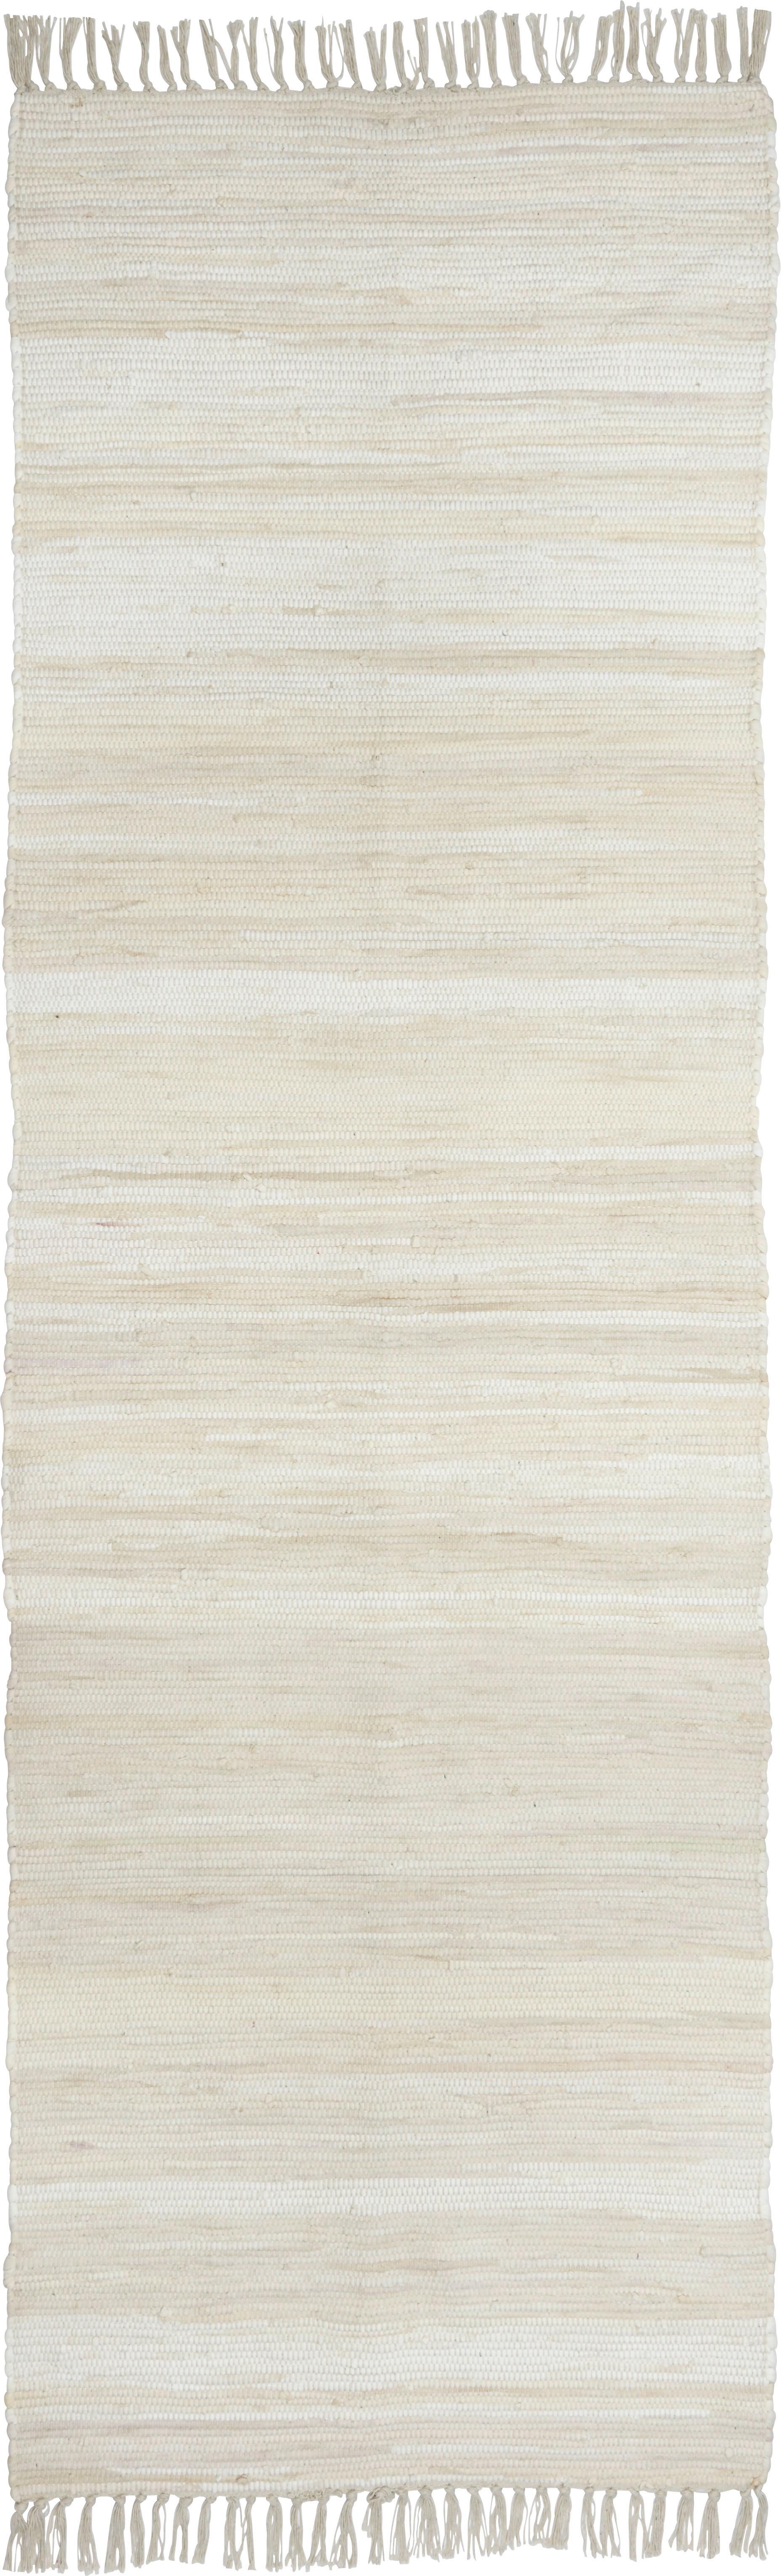 Fleckerlteppich Julia 3 in Creme ca. 70x230cm - Creme, KONVENTIONELL, Textil (70/230cm) - Modern Living